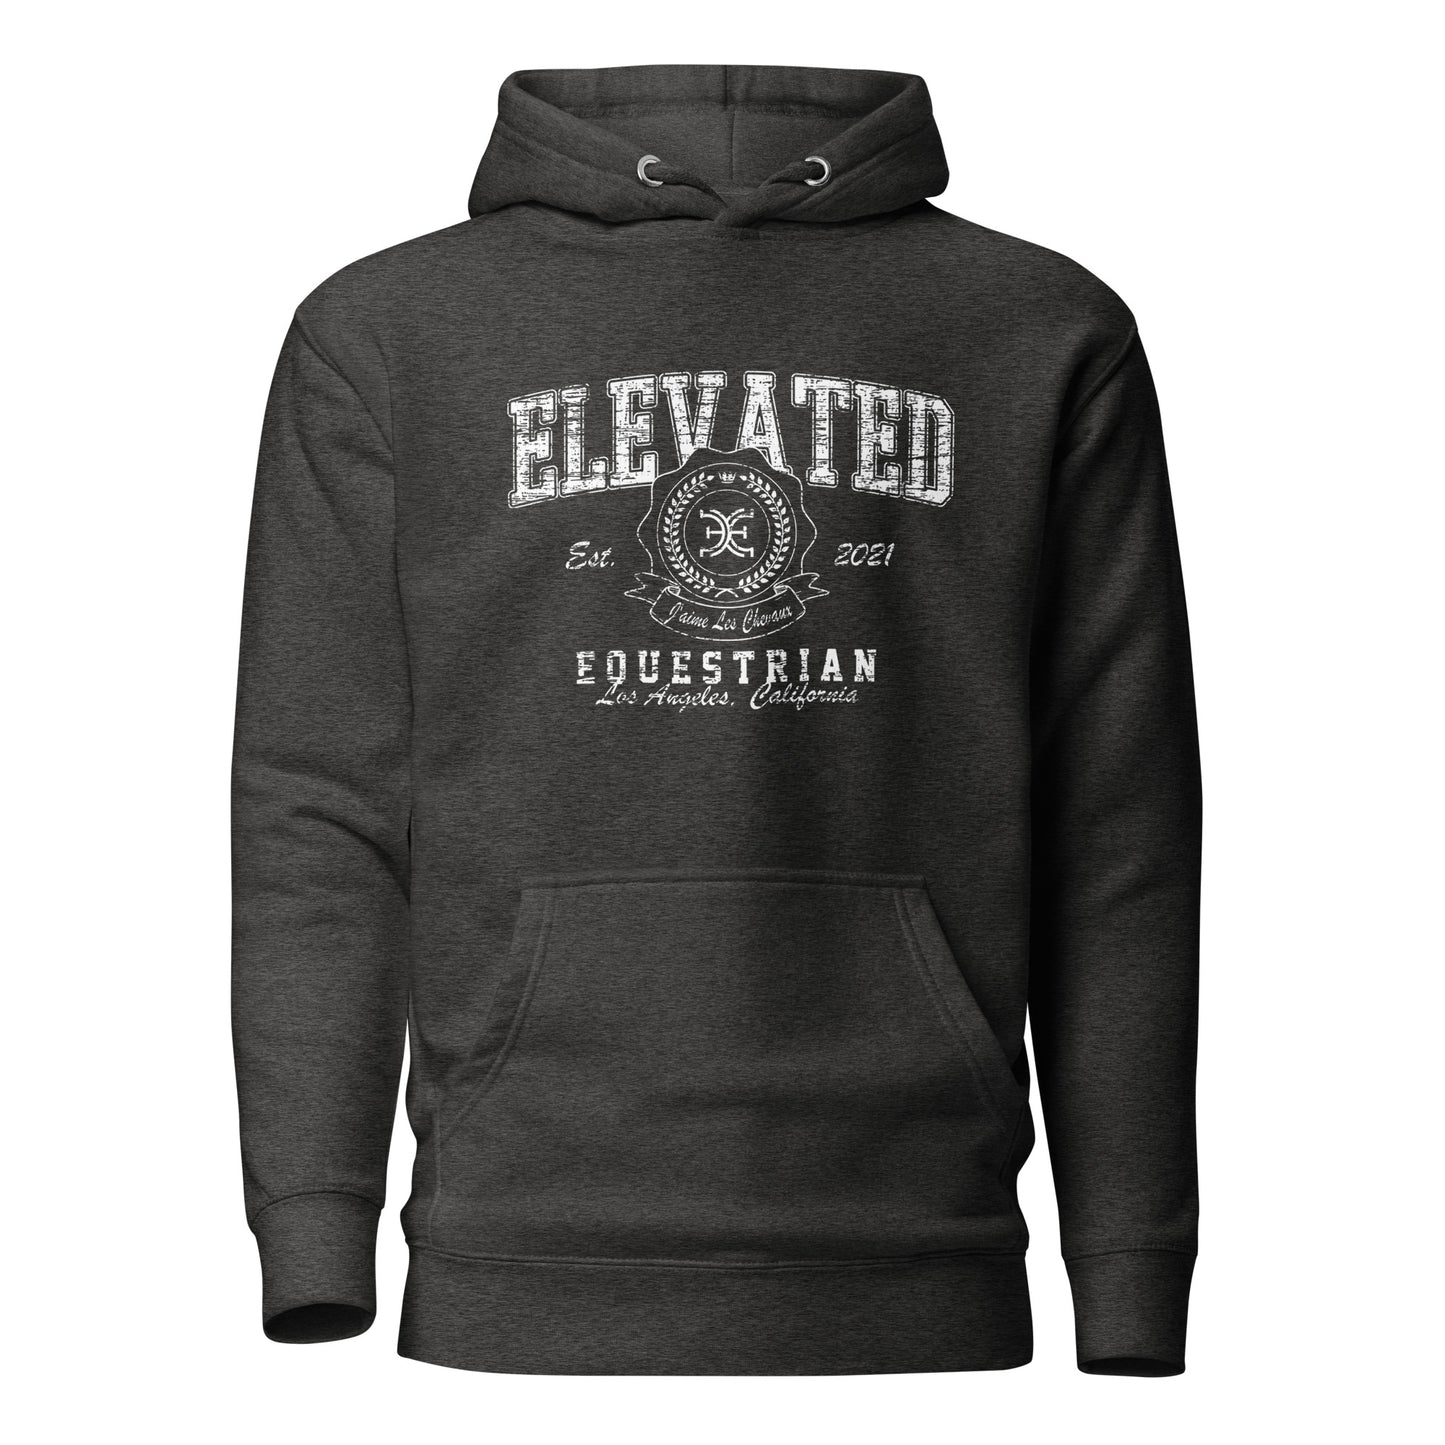 Elevated Equestrian Charcoal Grey Unisex Hooded Sweatshirt